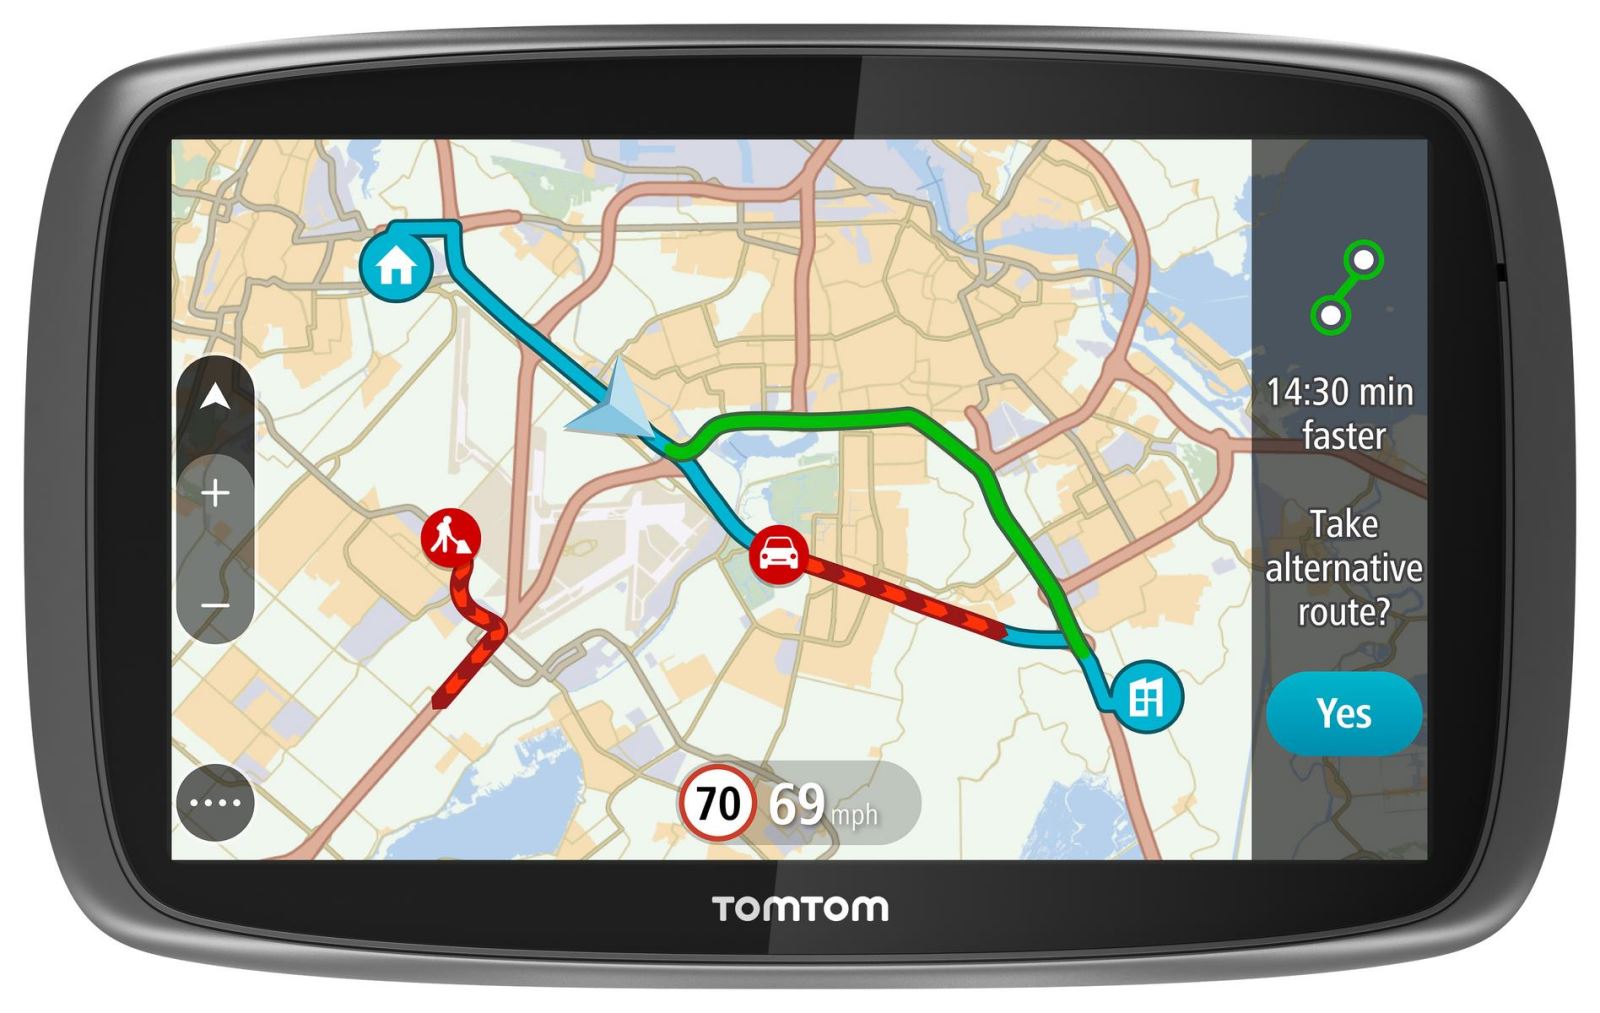 Sistem de navigatie Tom Tom GO 6100  World,  Ecran 6", Actualizari gratuite alte hartilor